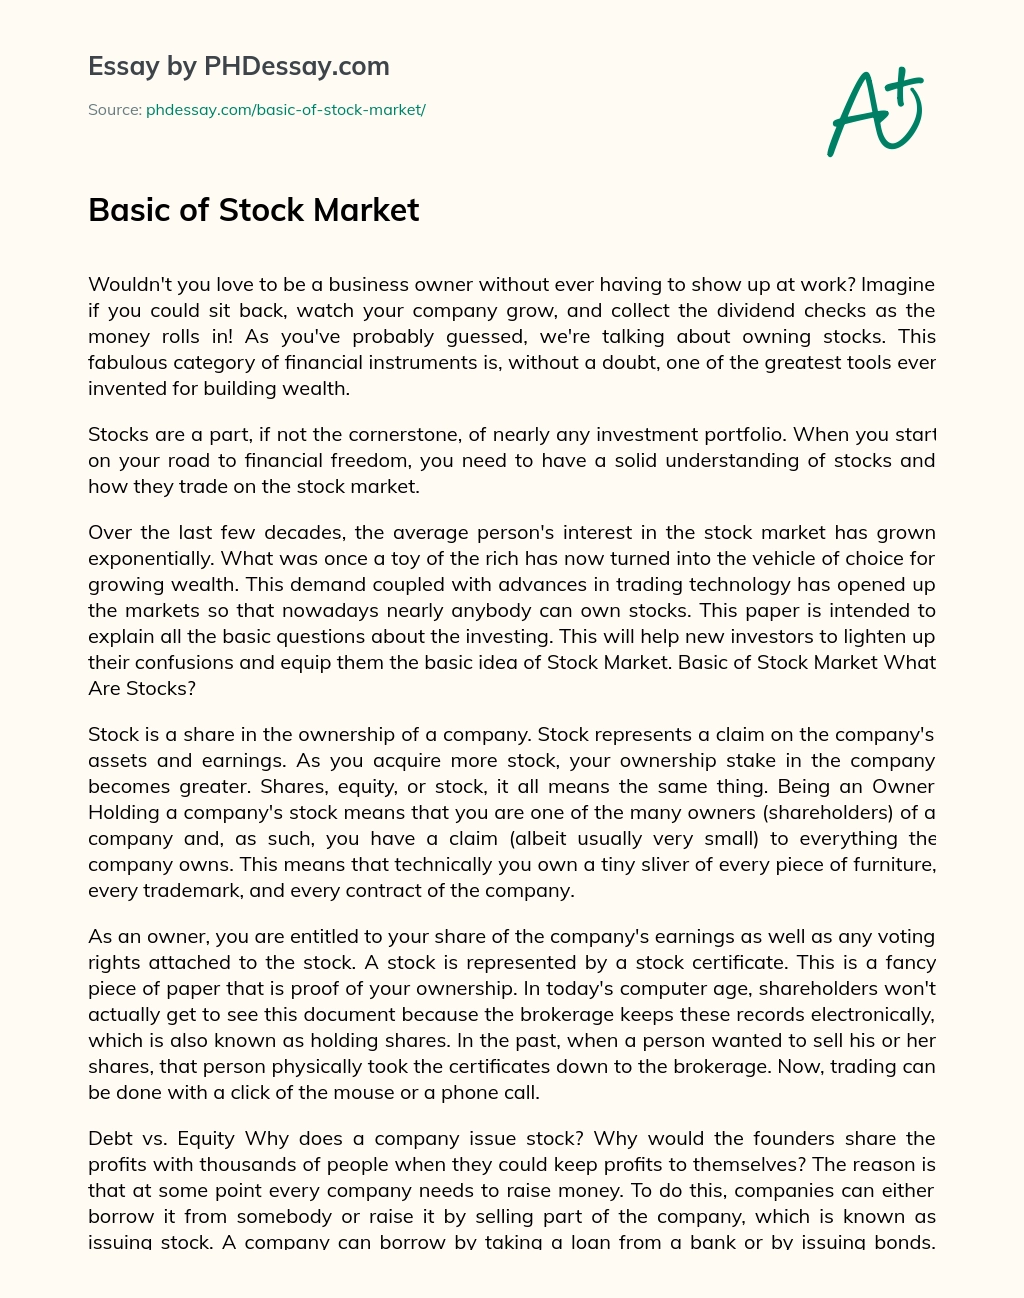 importance of stock market essay